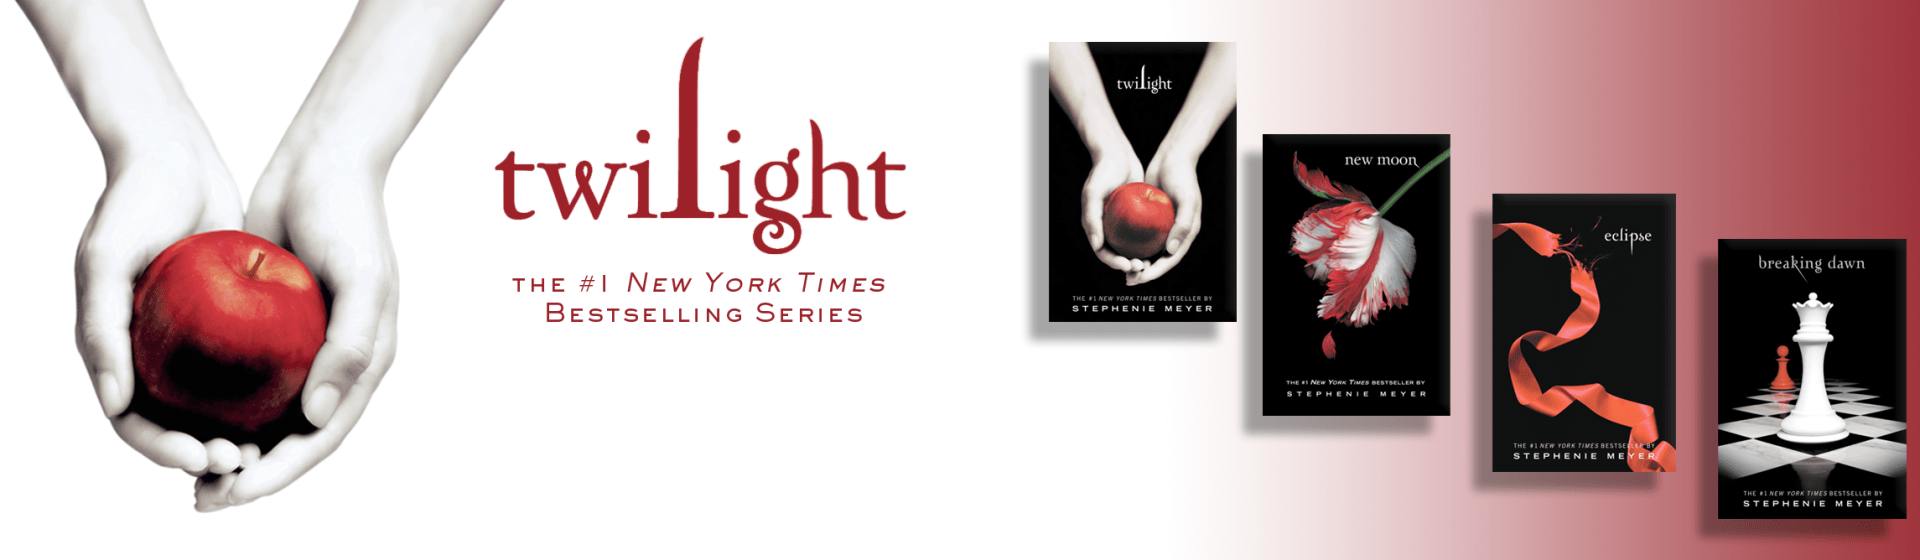 Twilight Series | Stephenie Meyer | Hachette Book Group